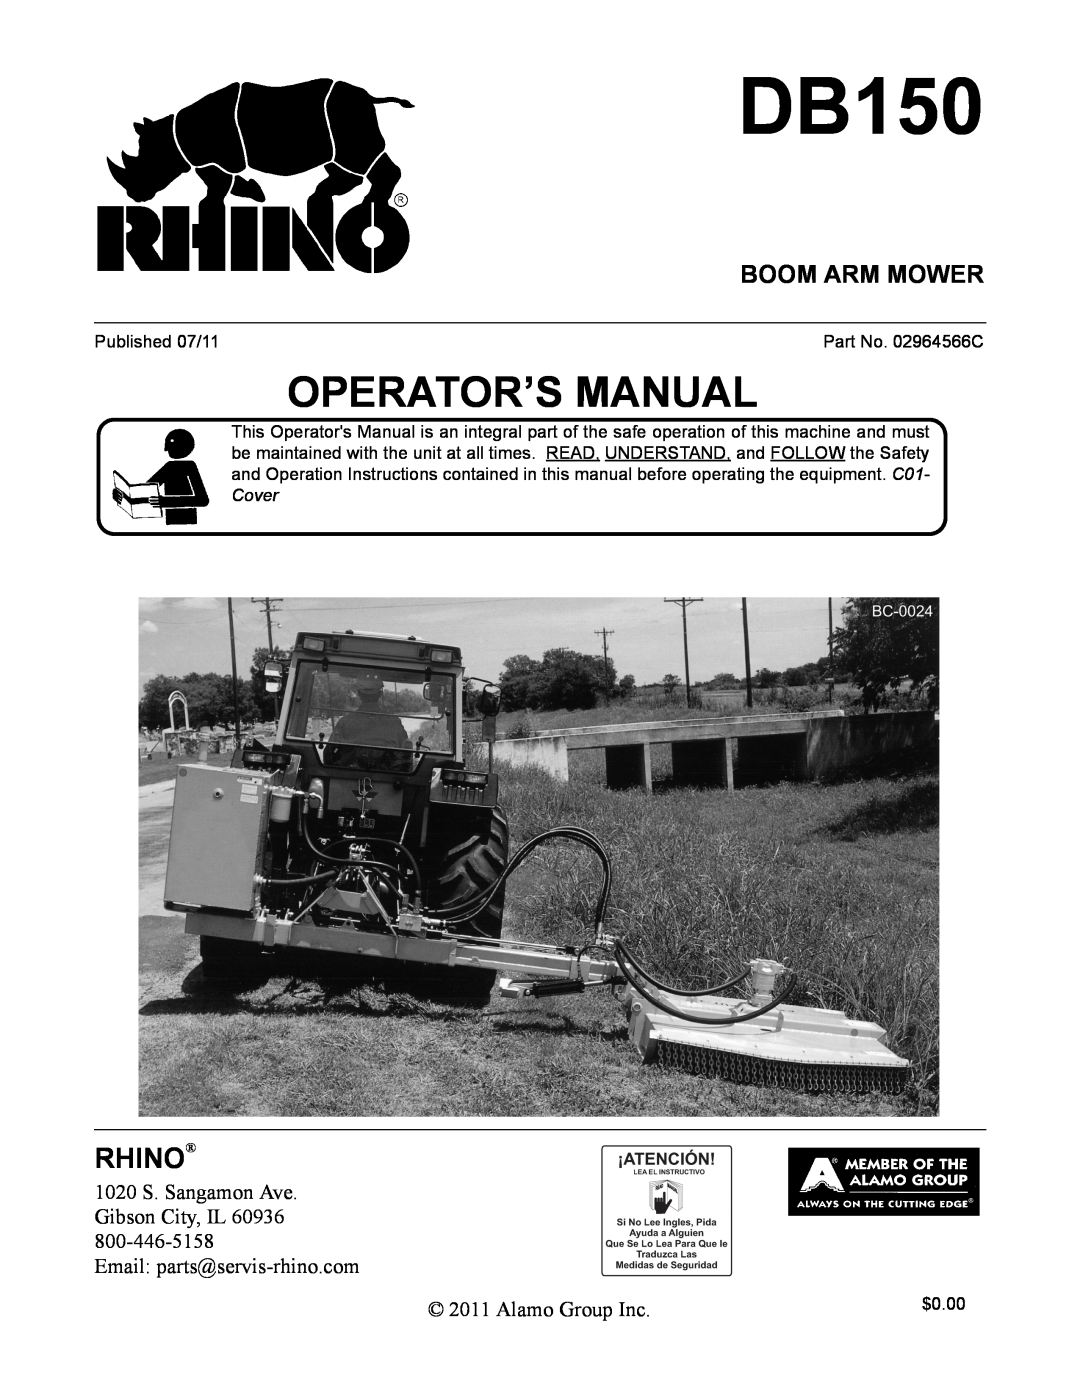 Rhino Mounts DB150 manual Rhino, Boom Arm Mower, Operator’S Manual 